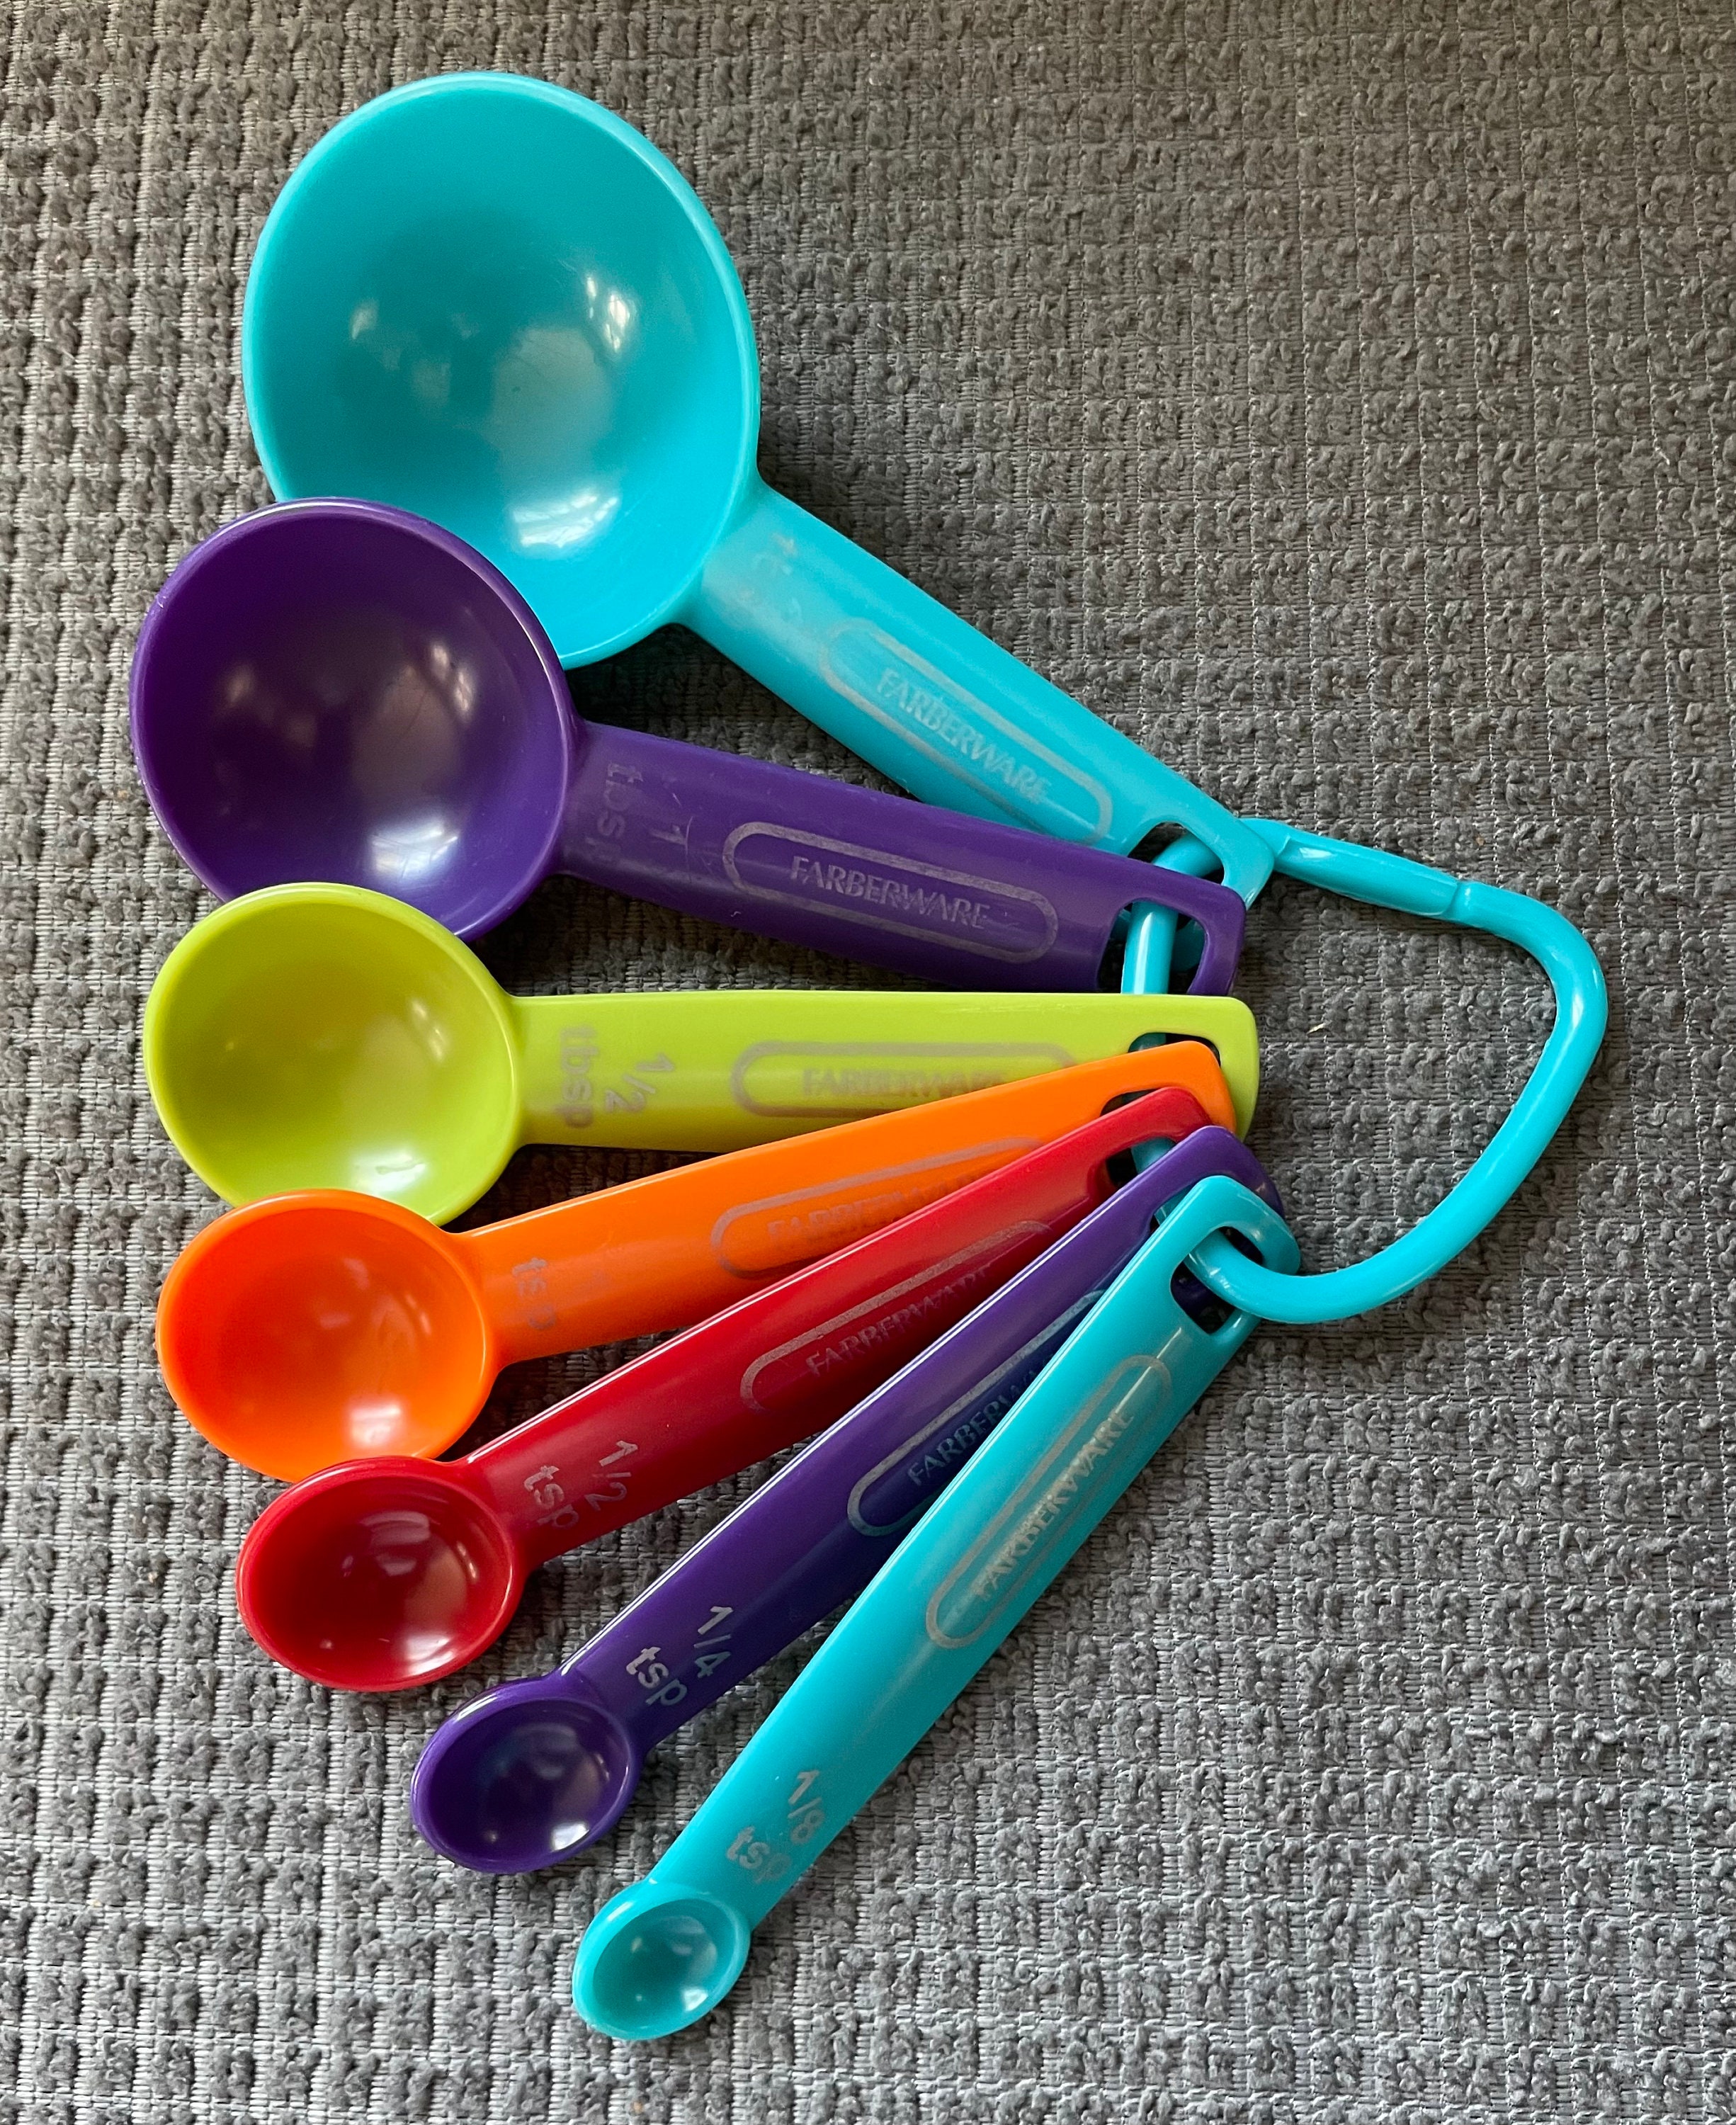 Farberware Measuring Cup Set Of 6.measuring spoons teal